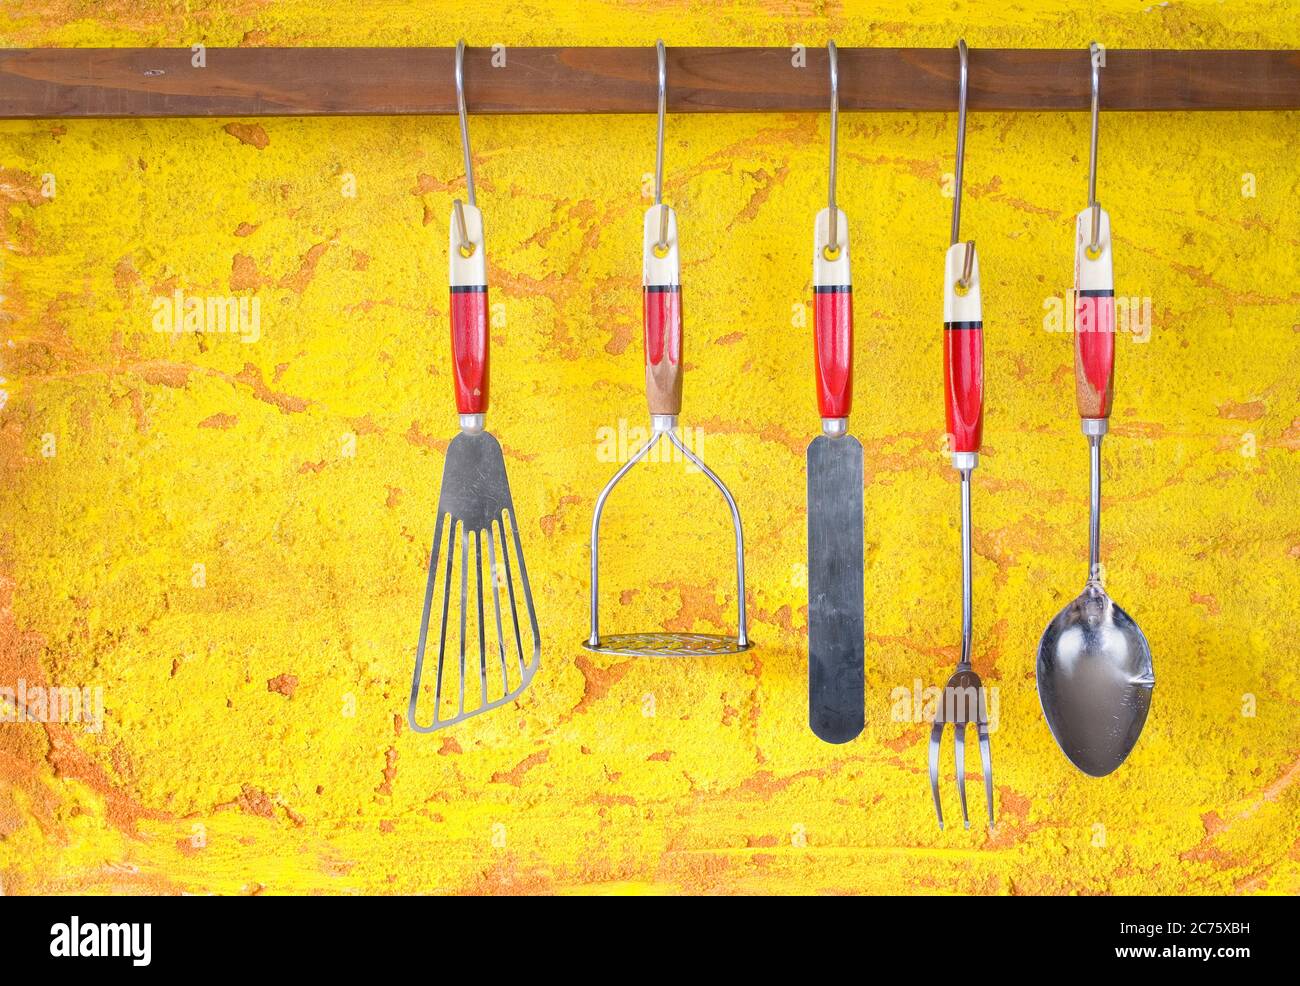 vintage kitchen utensils Stock Photo